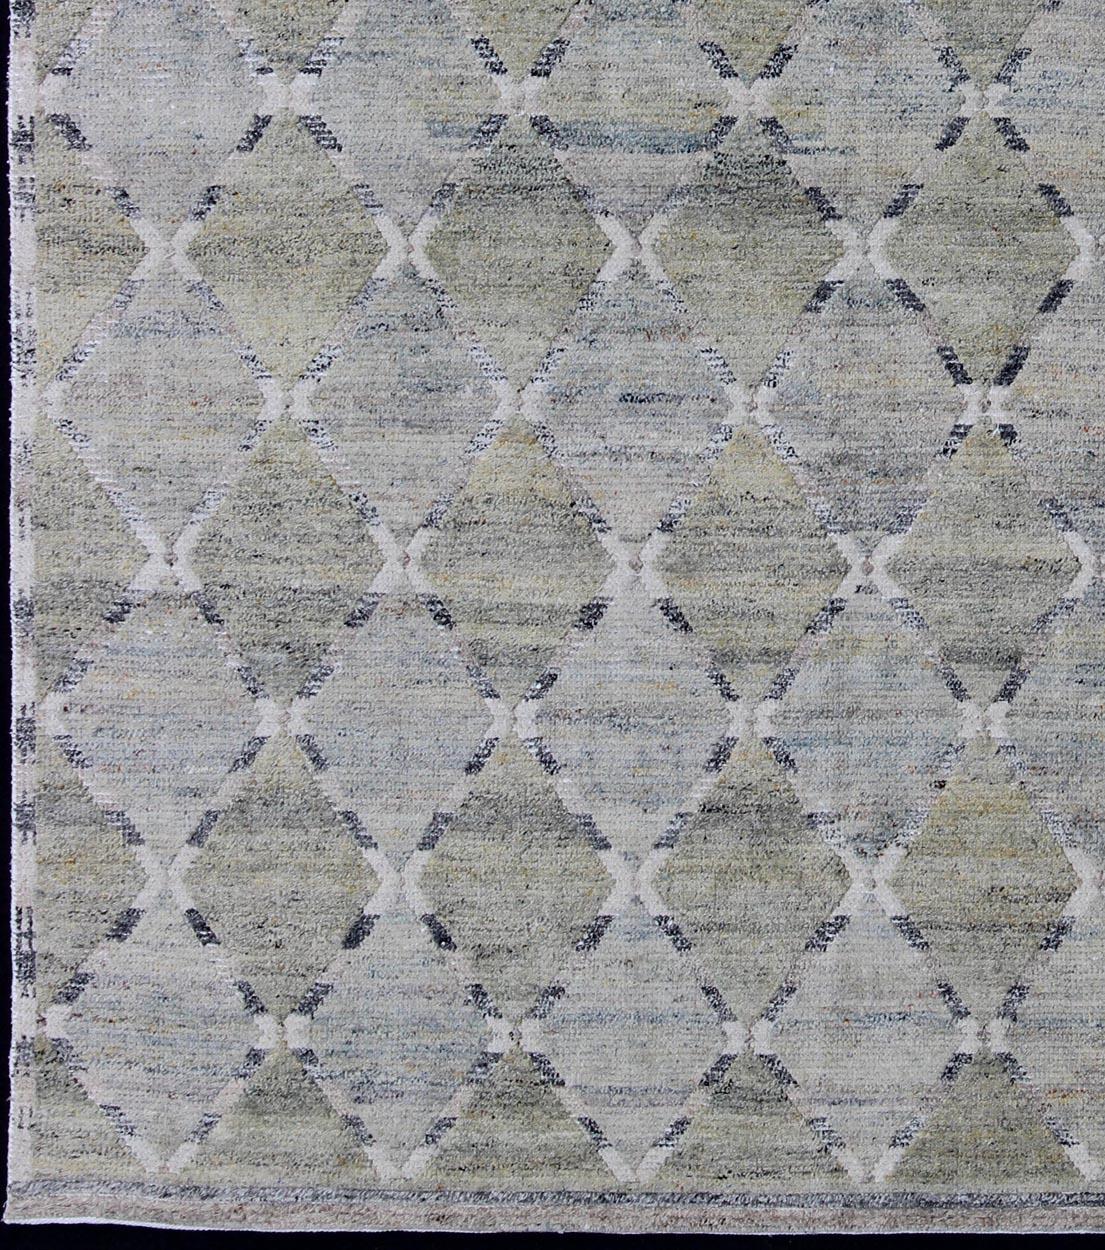 Gray geometric latticework pattern modern Scandinavian piled rug in neutral tones. Keivan Woven Arts /  rug RJK-16354-shb-008-pile, country of origin / type: India / Scandinavian flat-weave
Measures: 9'2 x 11'10.
This Scandinavian flat-weave is